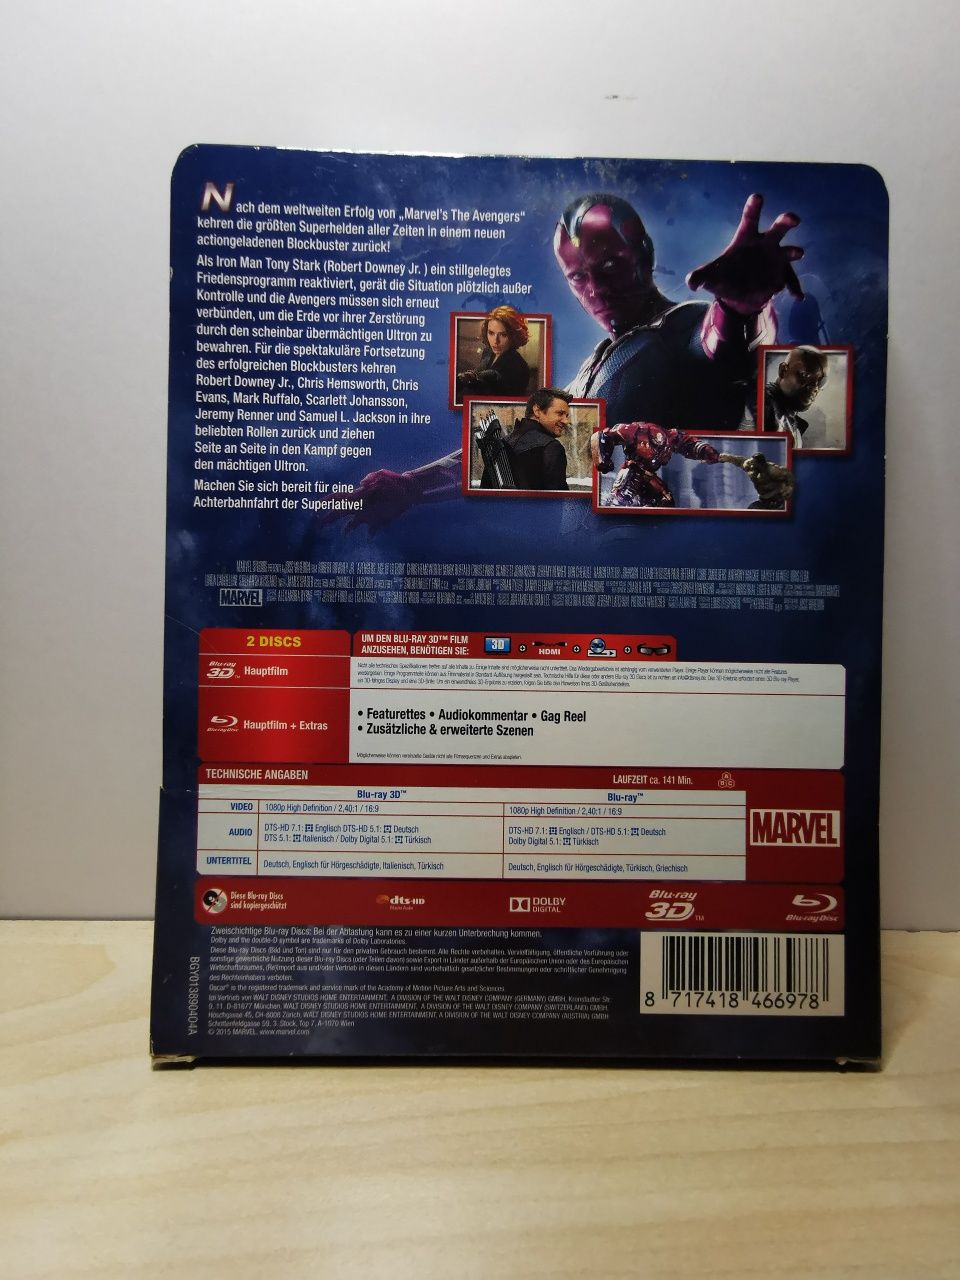 Steelbook Avengers Blu ray